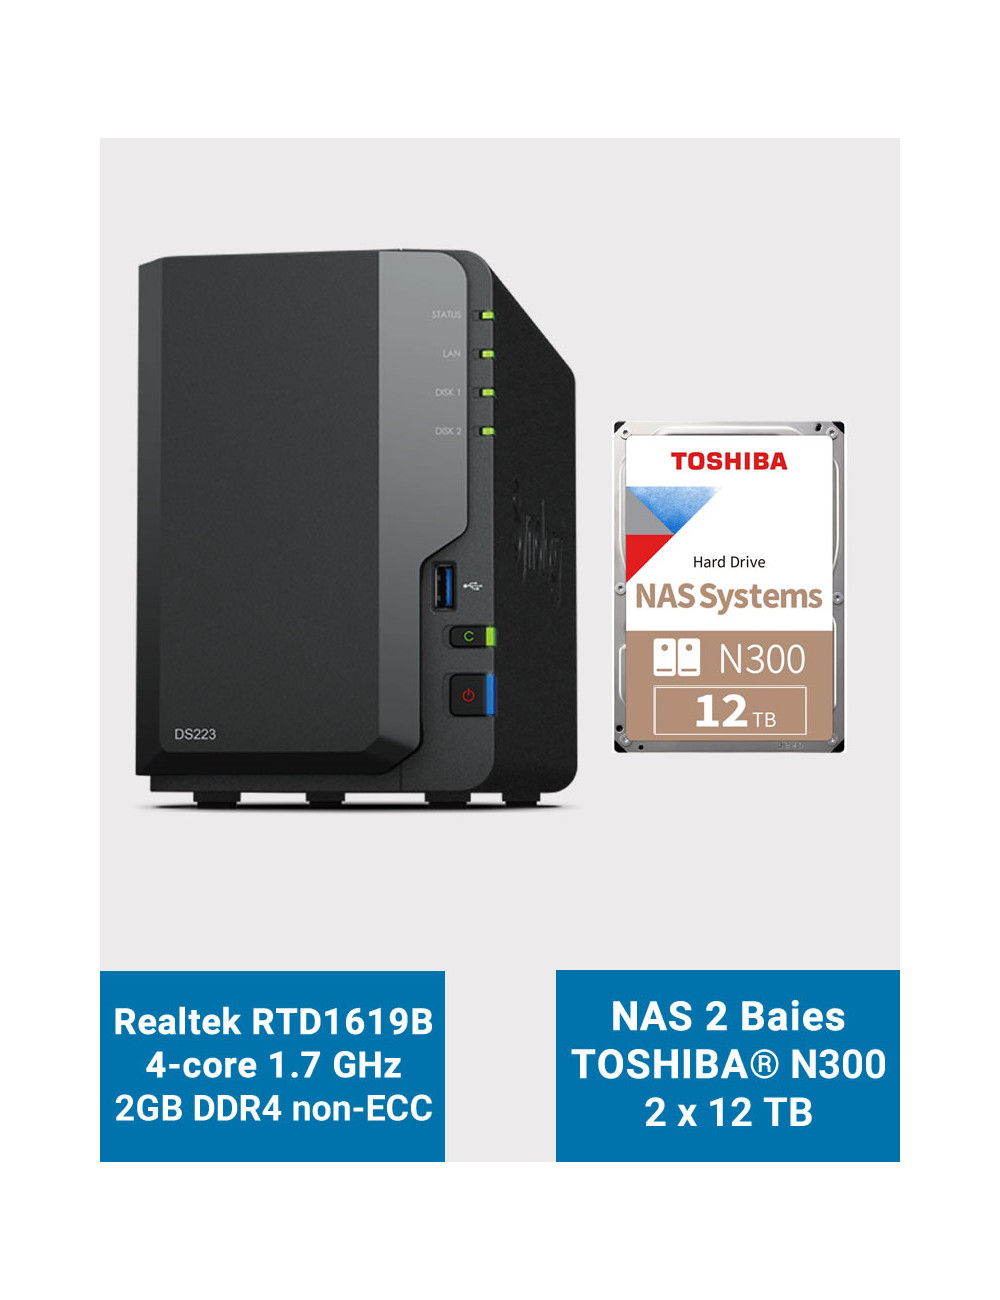 Synology DS223 NAS Server Toshiba N300 24TB (2x12TB)